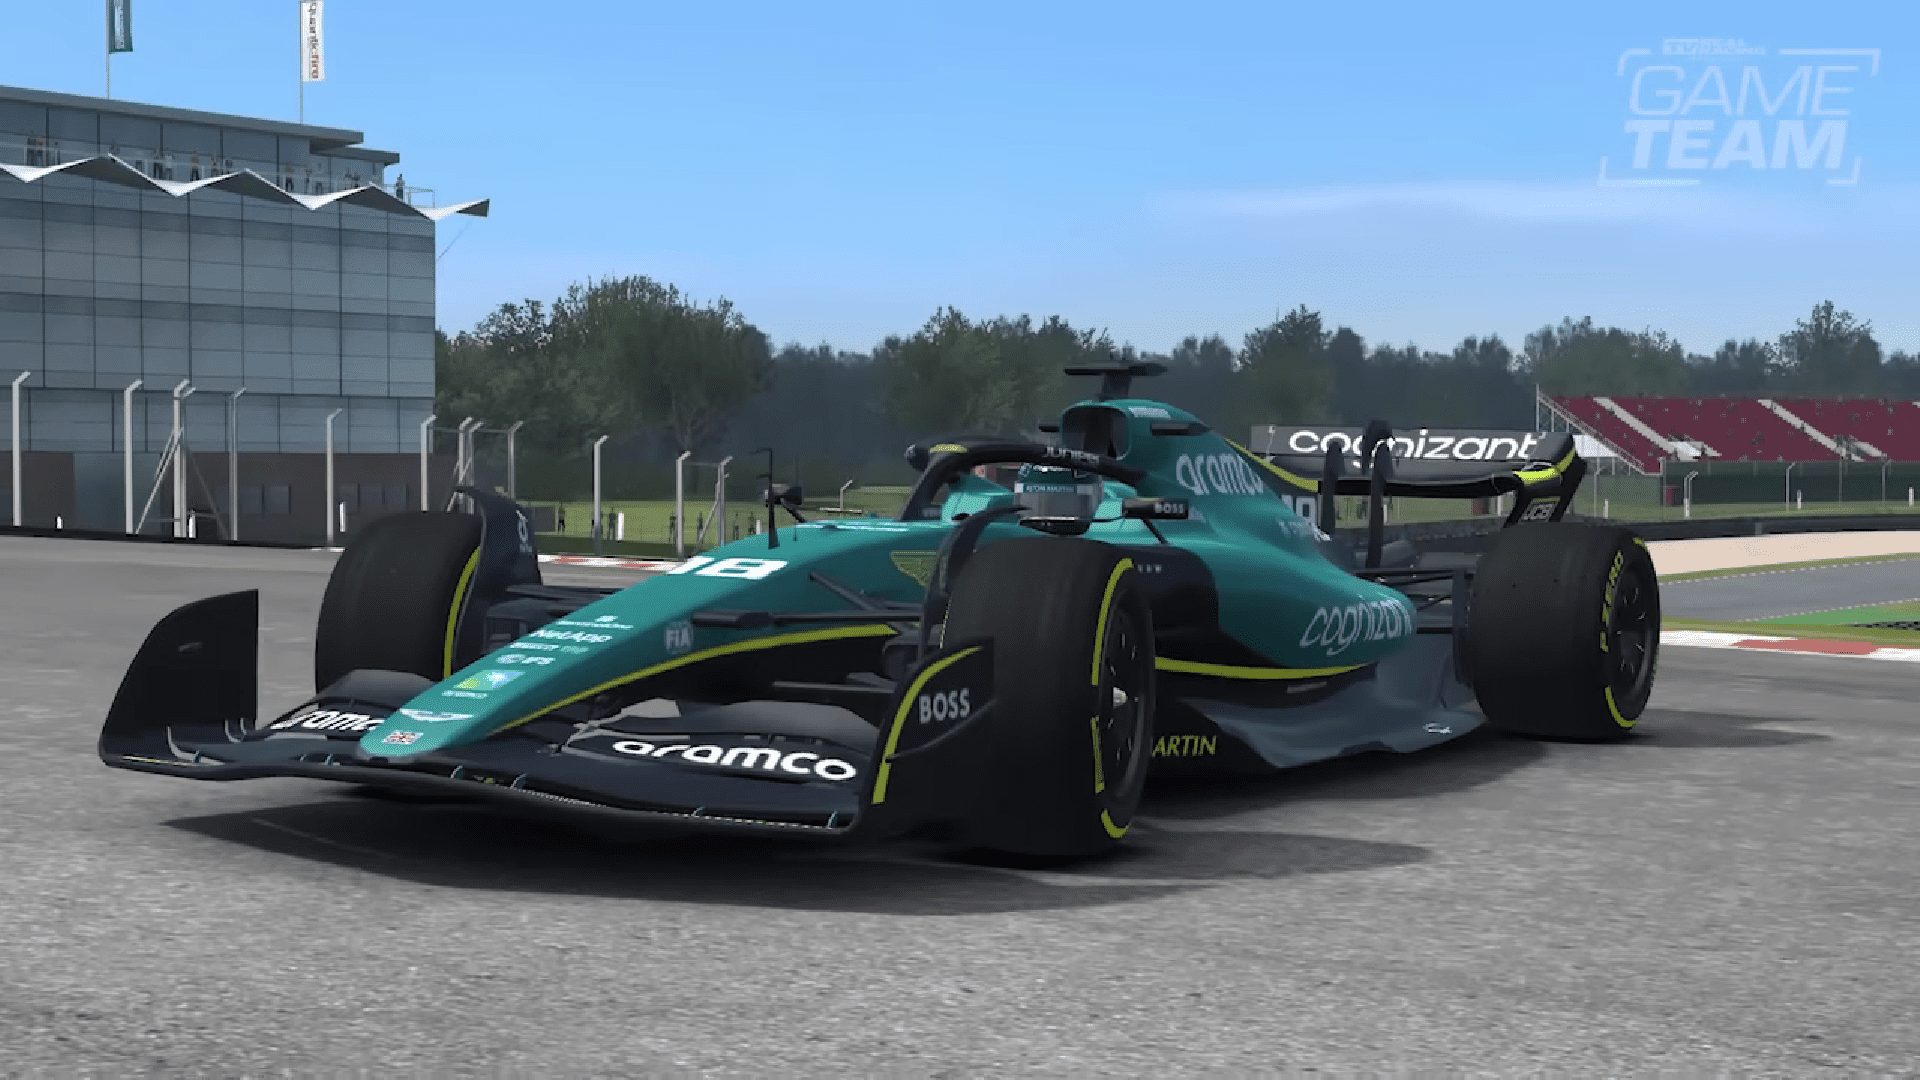 2022 Formula 1 cars set for Real Racing 3 debut Traxion